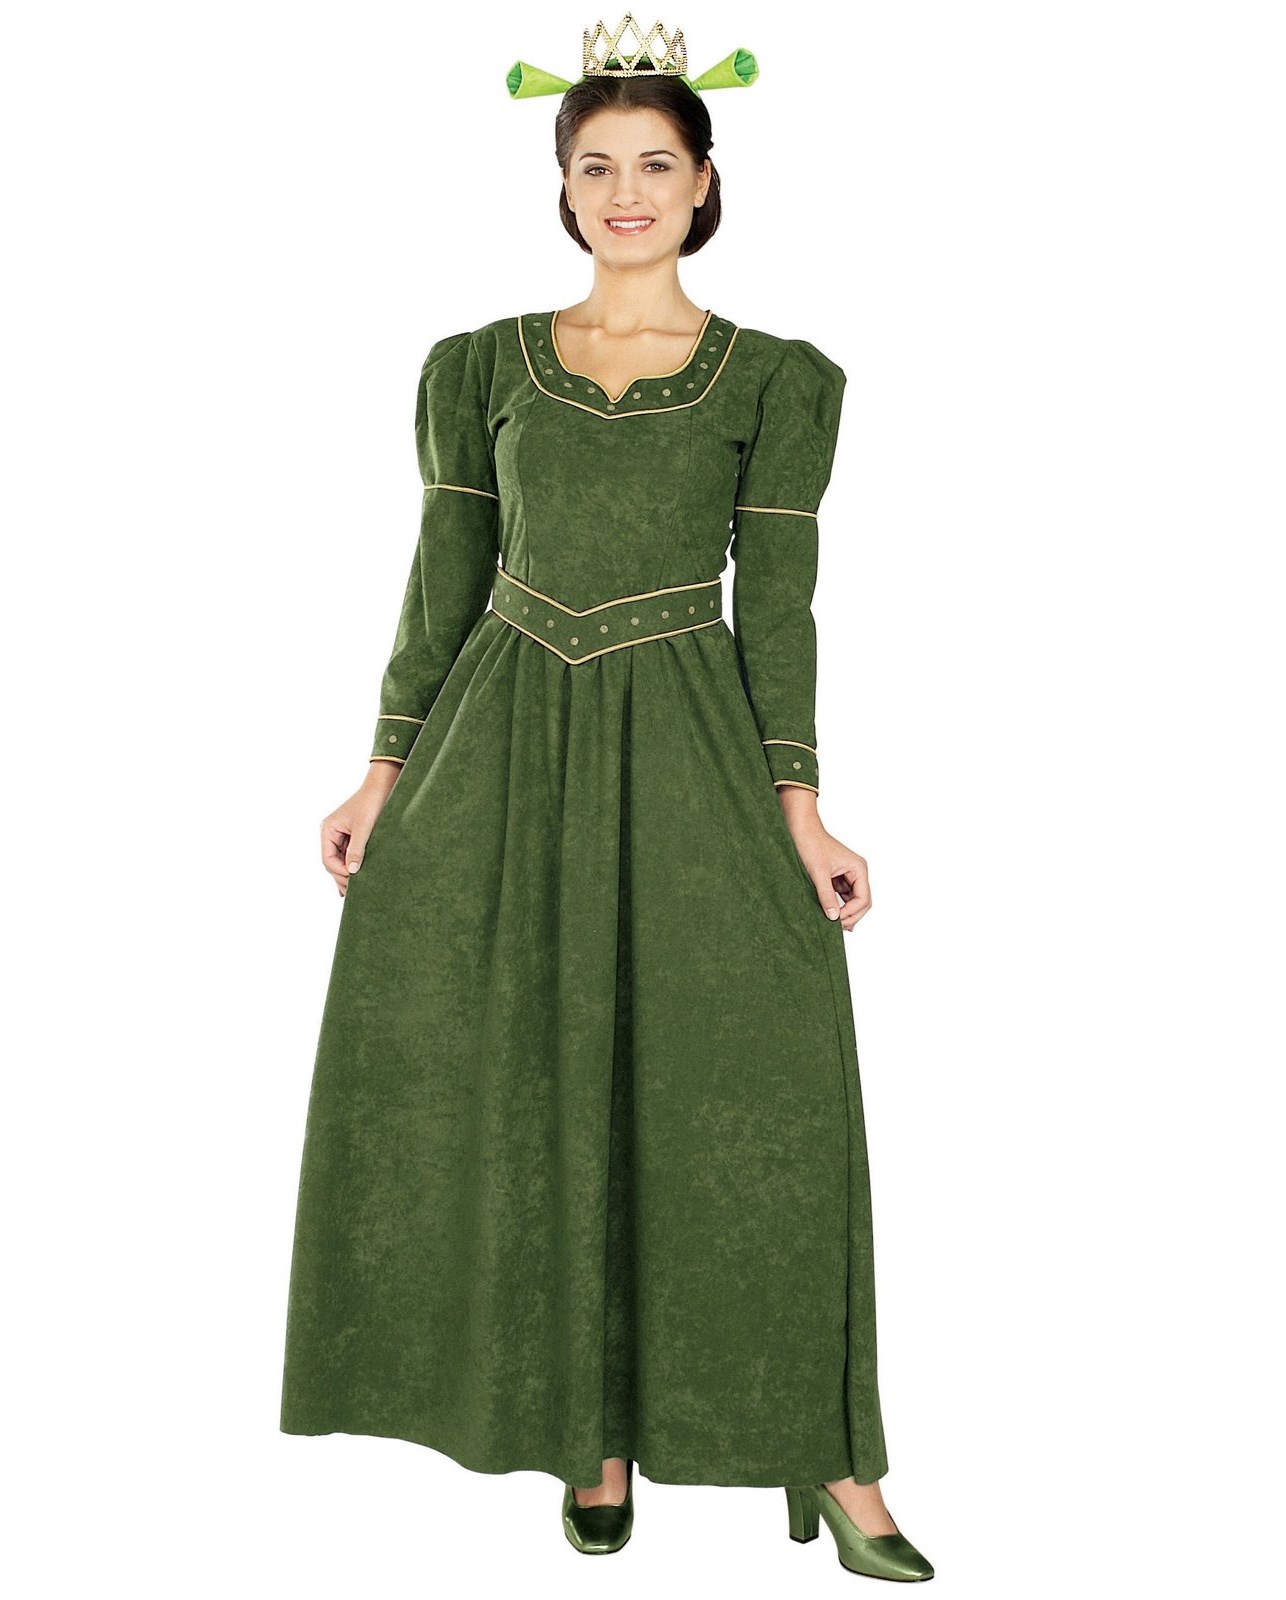 Shrek  Princess Fiona Deluxe Adult Costume